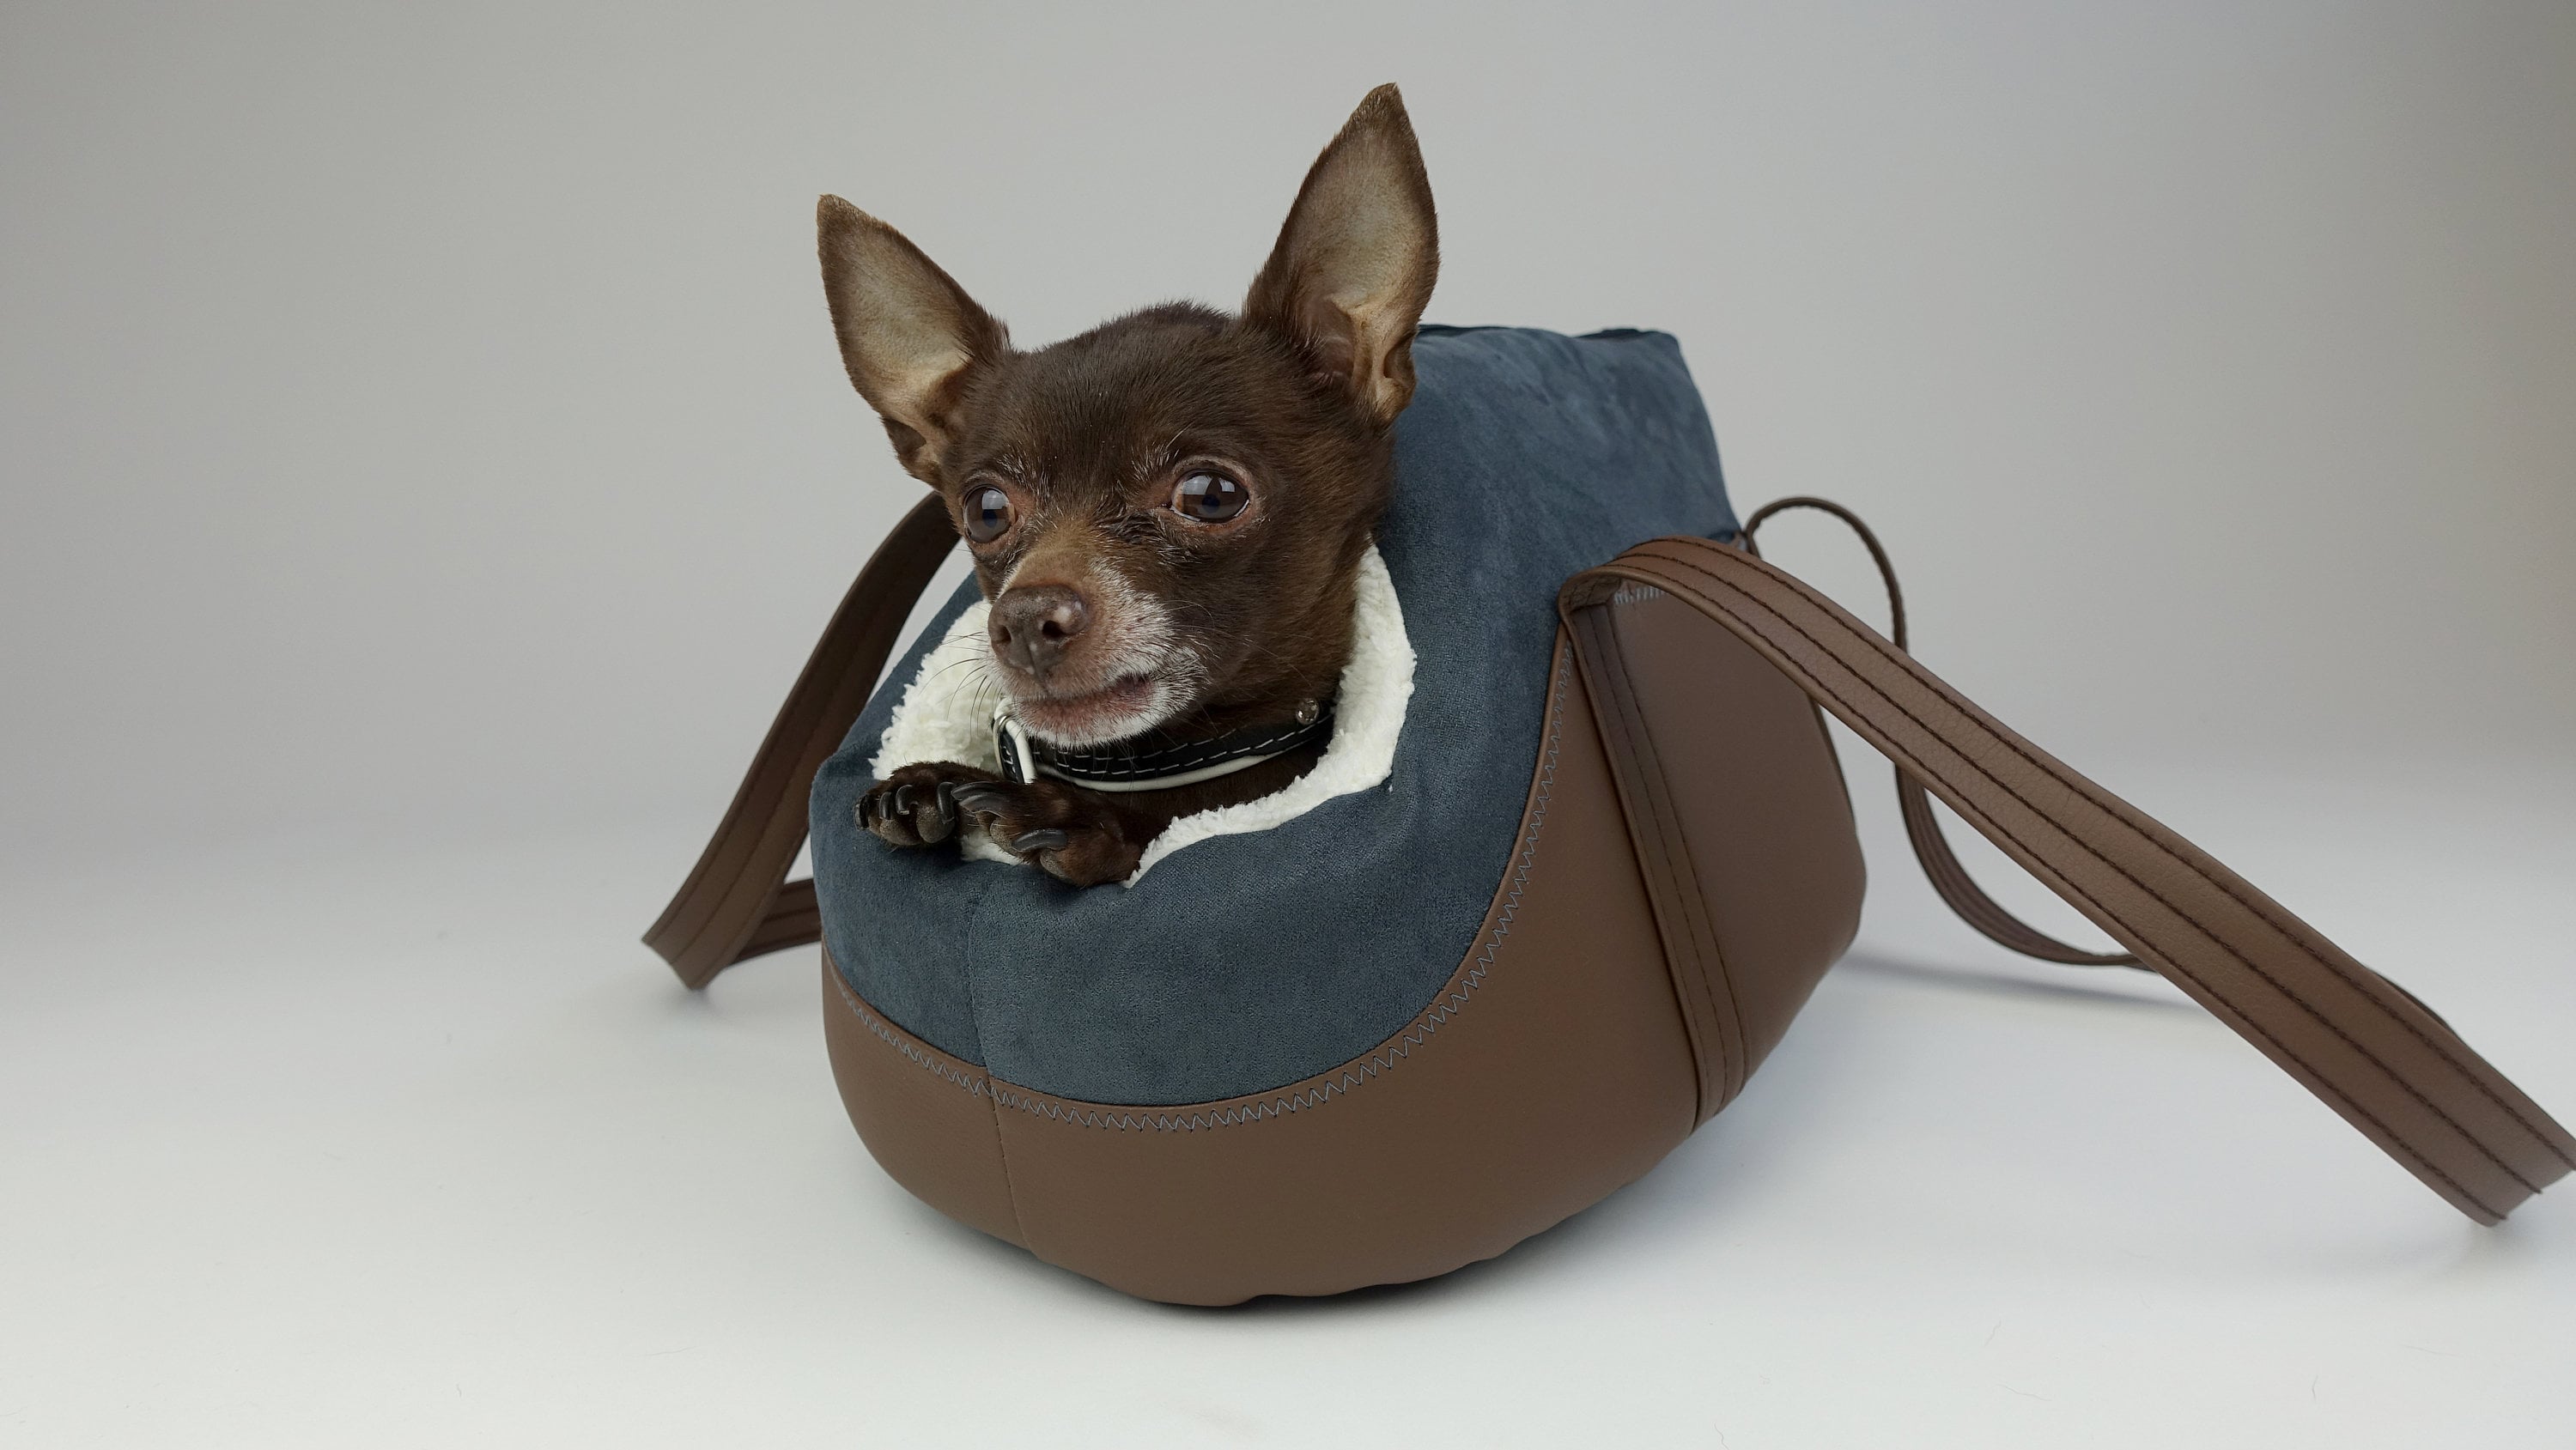 The Best Pet Carrier Bags - The Luxonomist